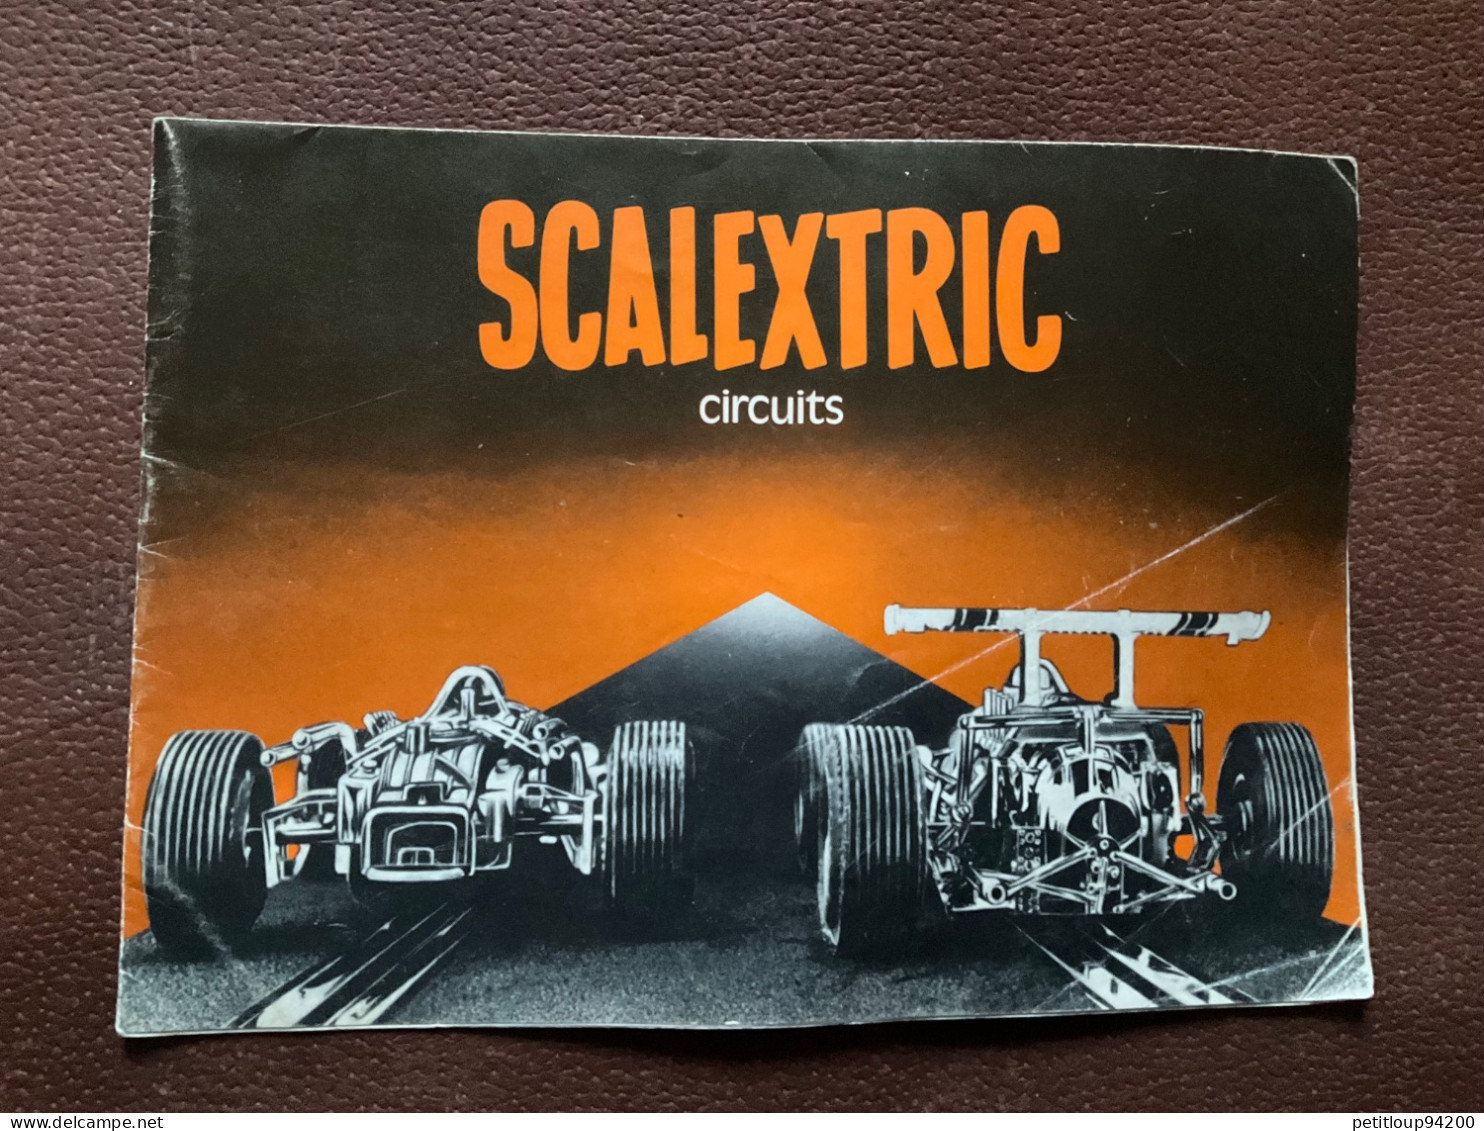 DEPLIANT Circuits SCALEXTRIC Meccano - French